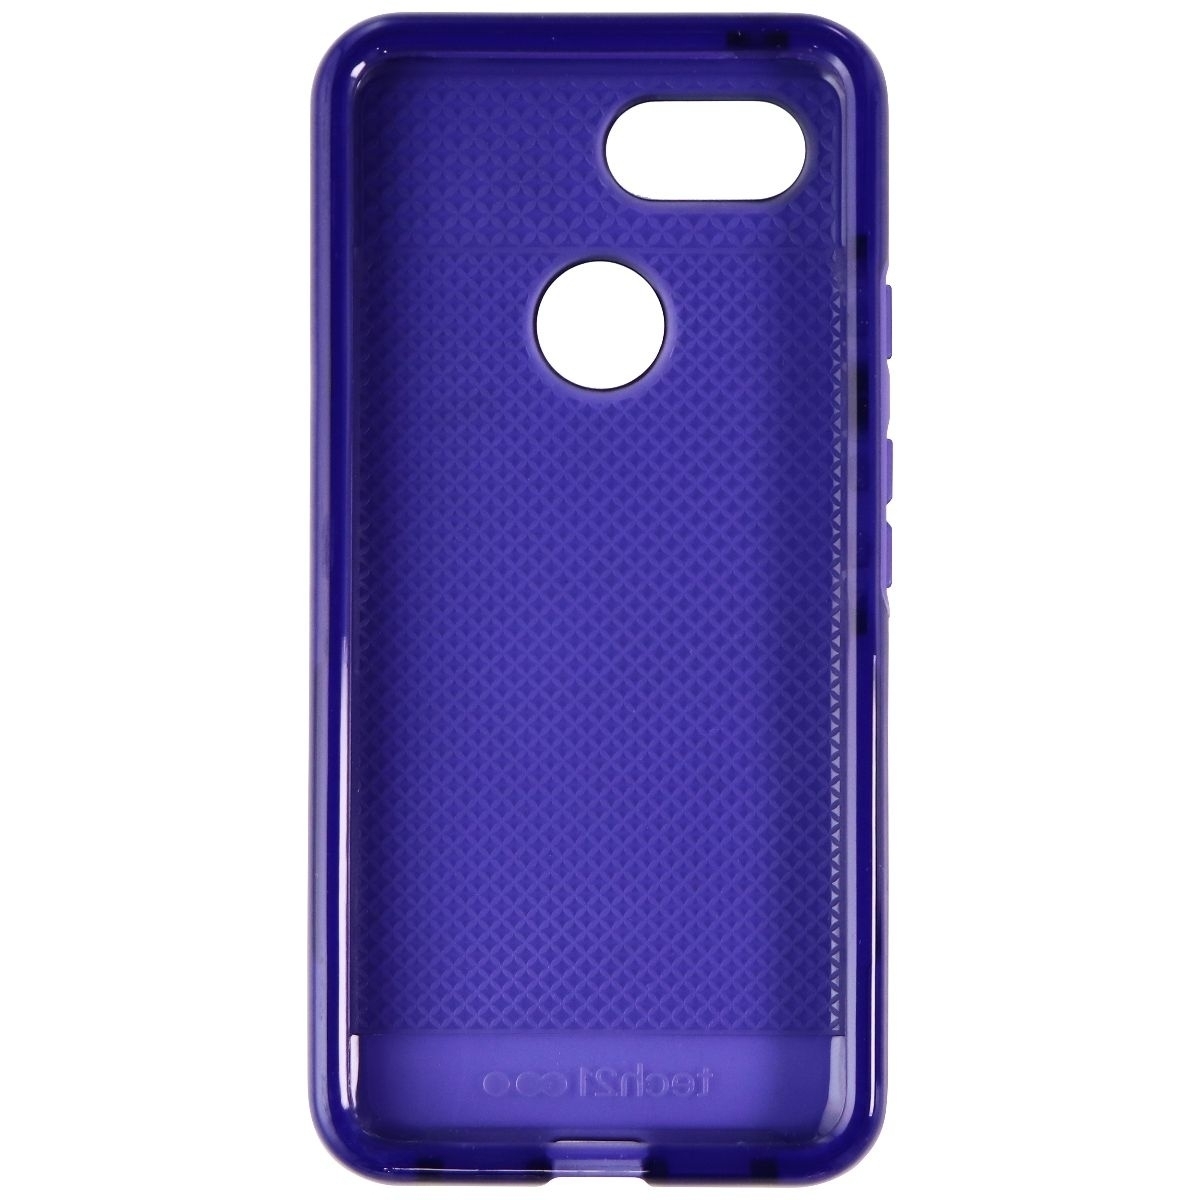 Tech21 Evo Check Series Gel Case For Google Pixel 3 - Ultra Violet Purple